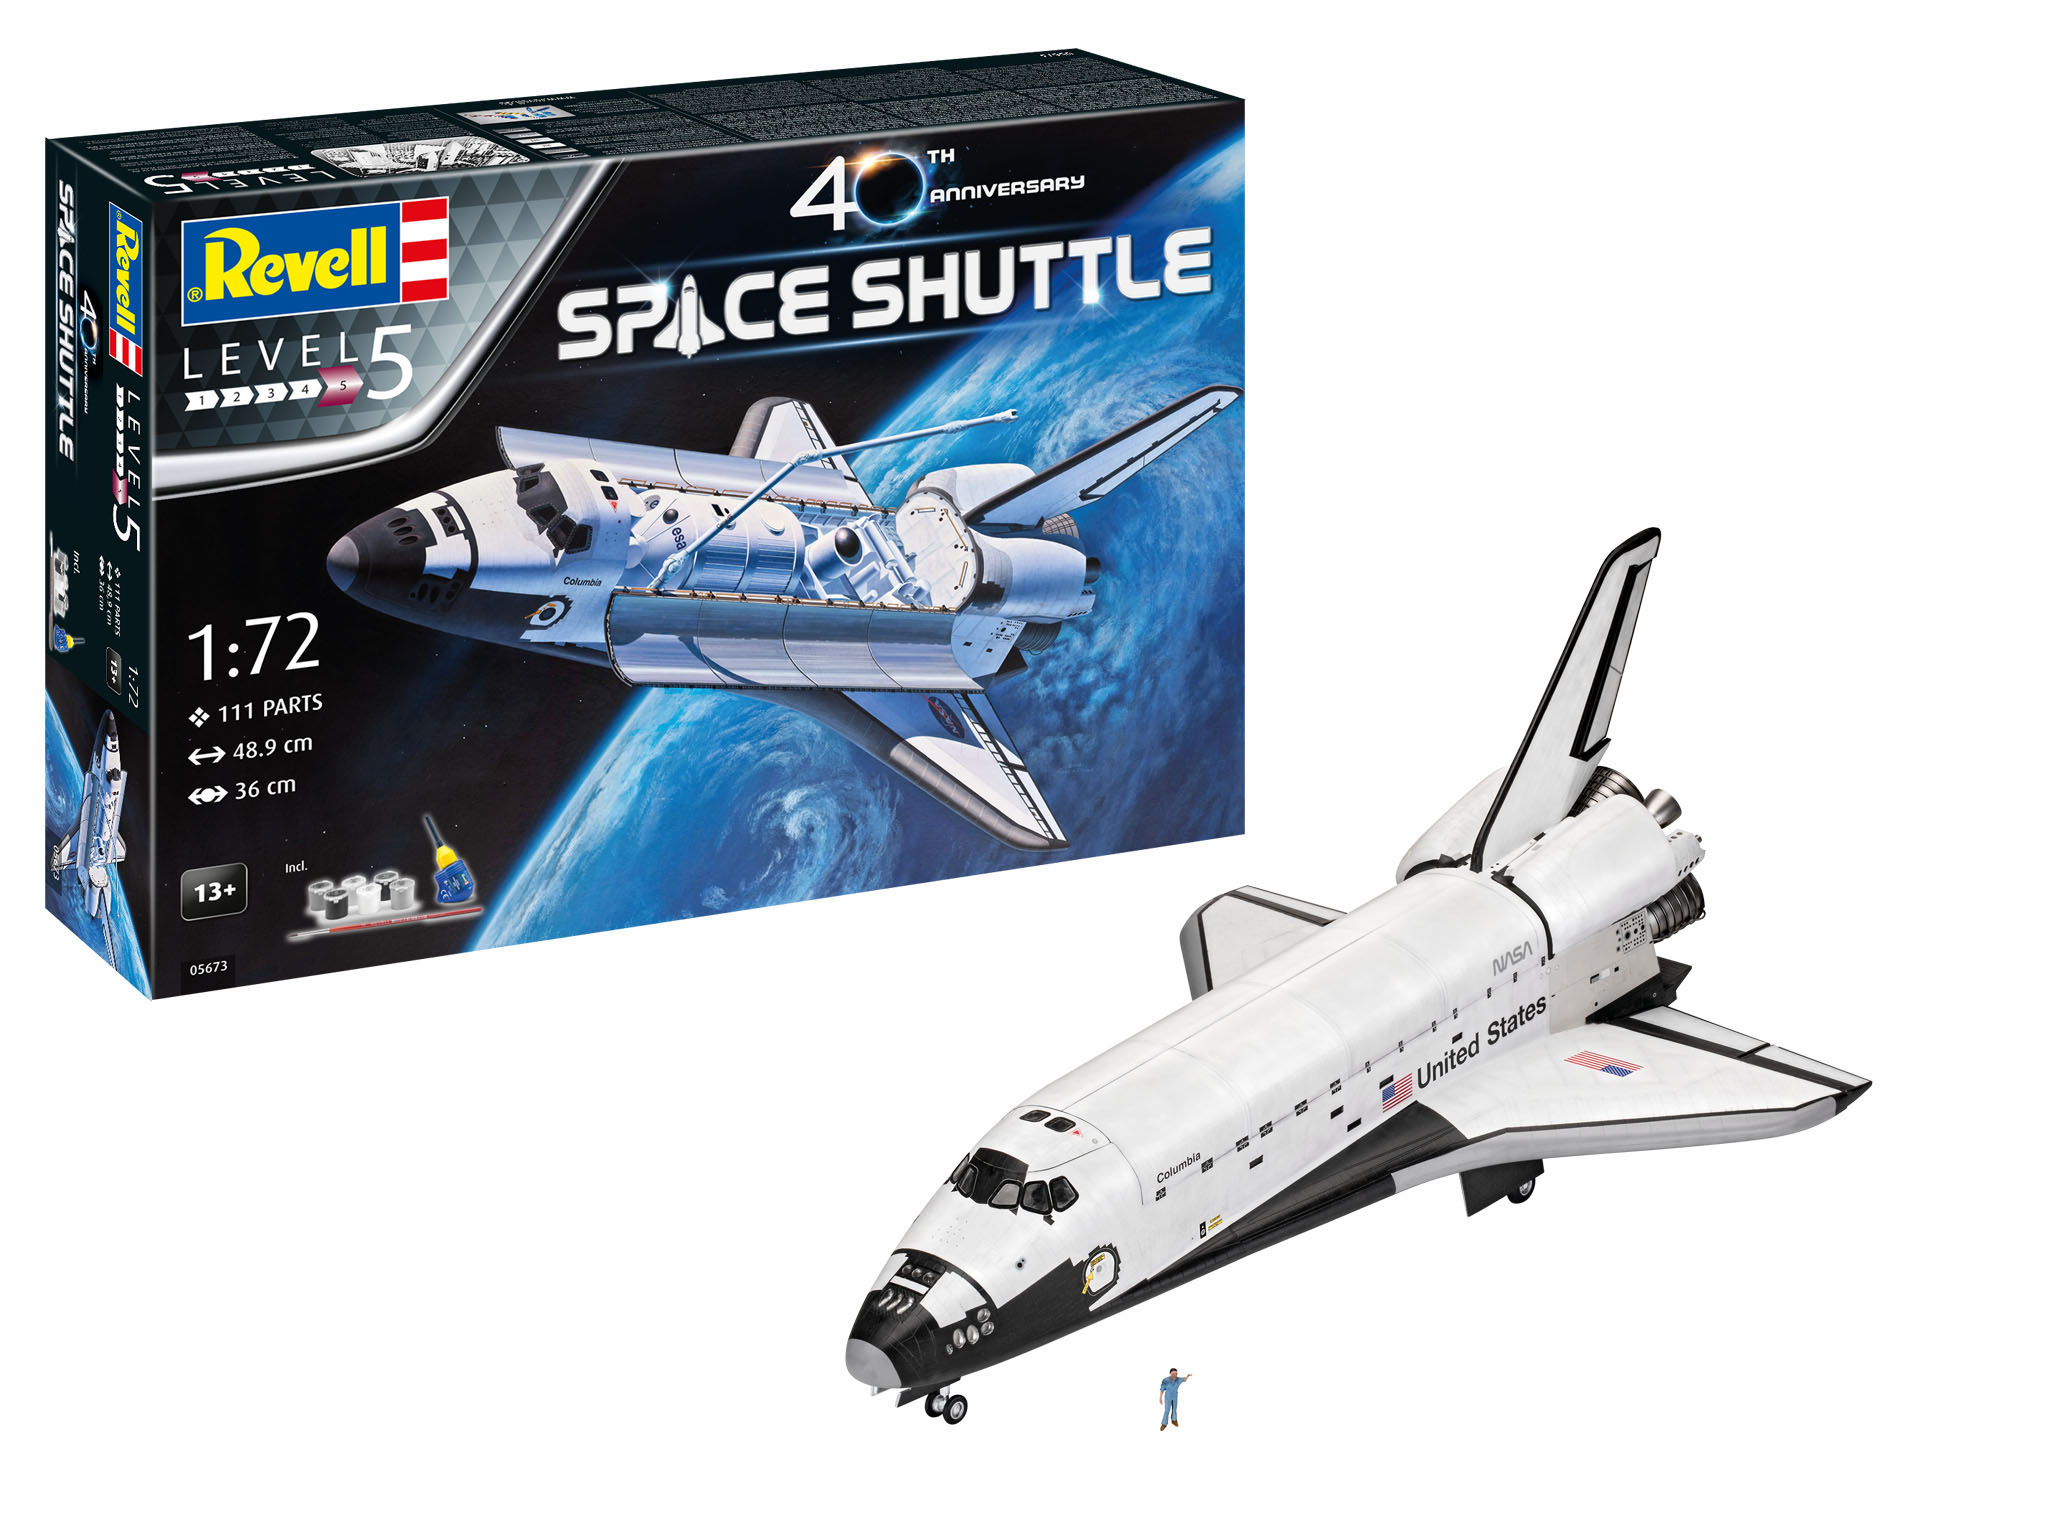 revell-05673-40th-Anniversary-Space-Shuttle-Bausatz